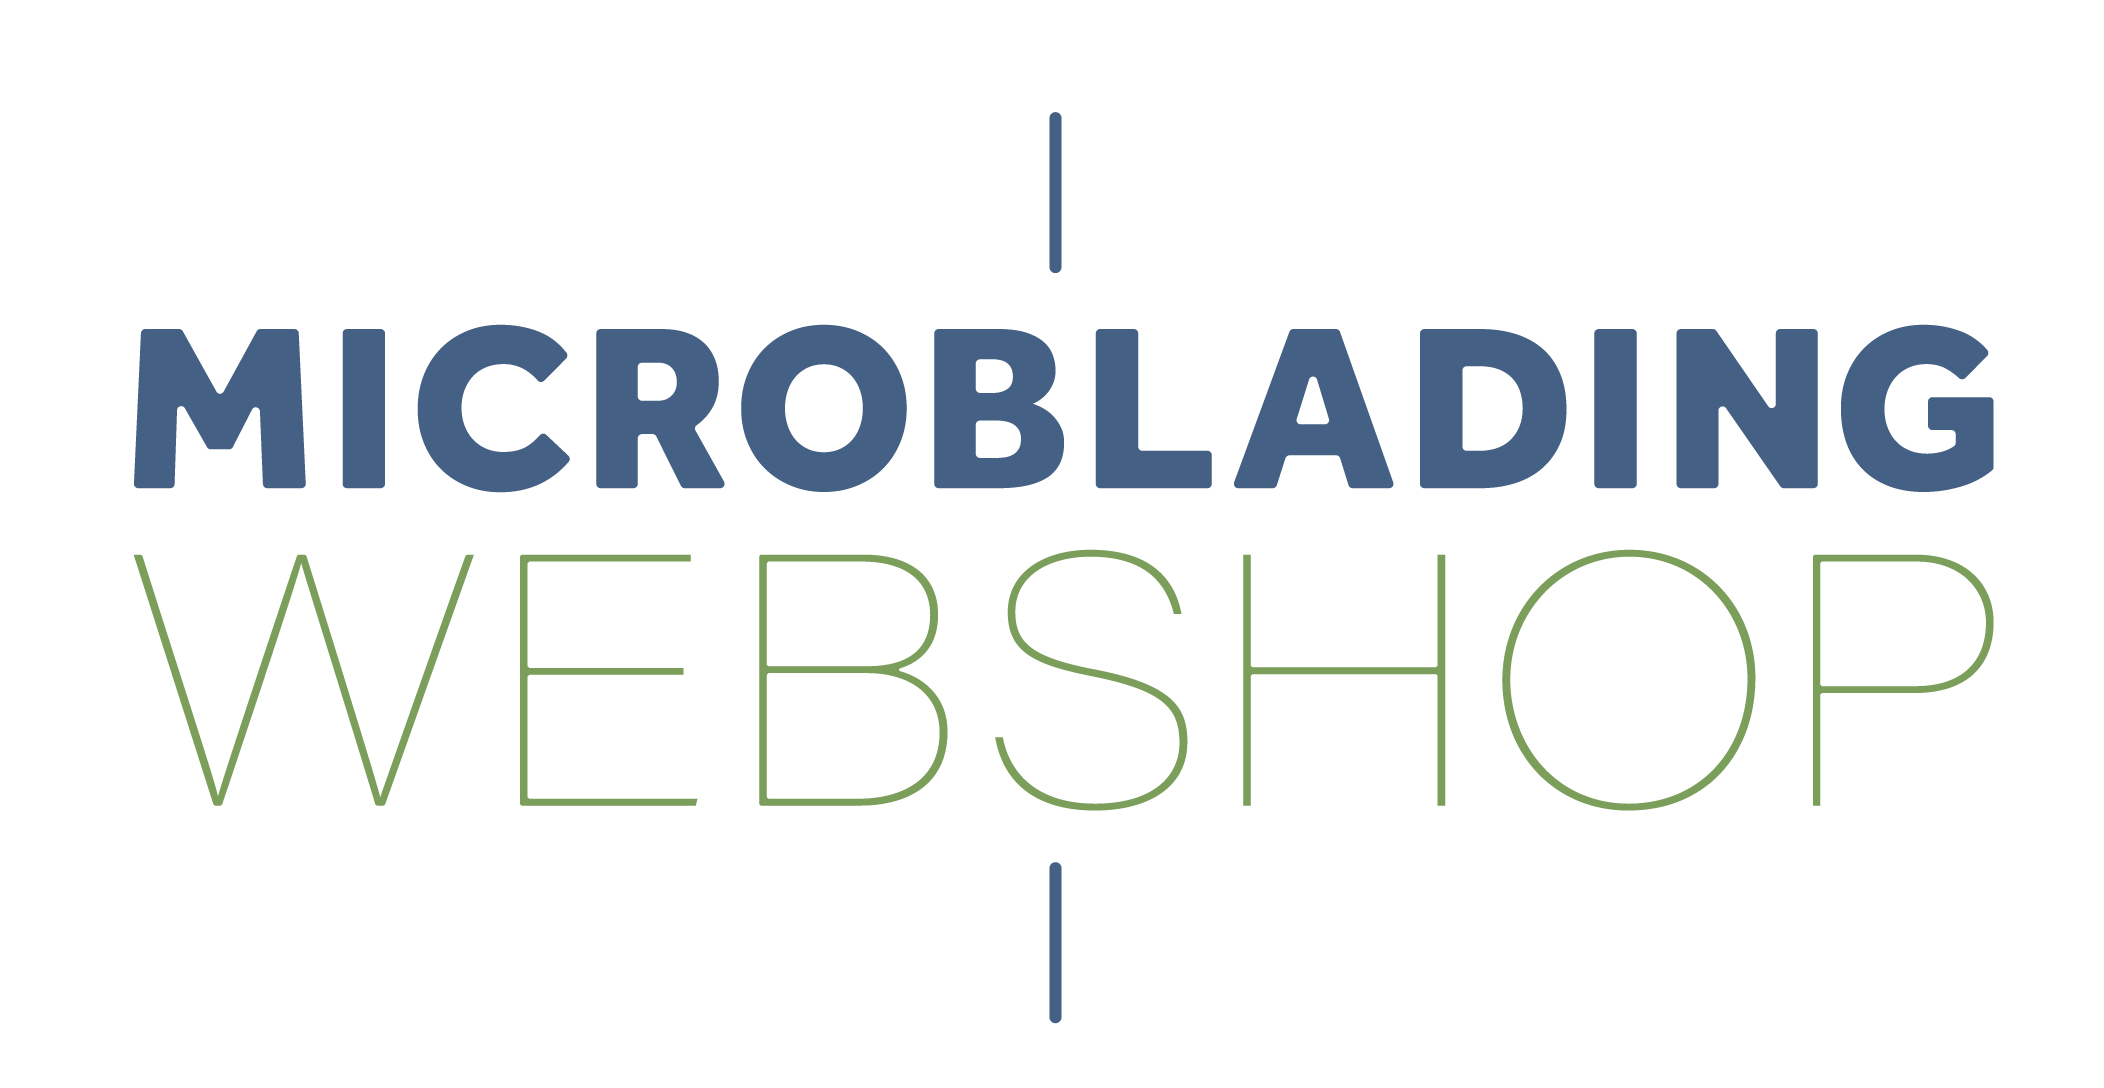 Microblading webshop